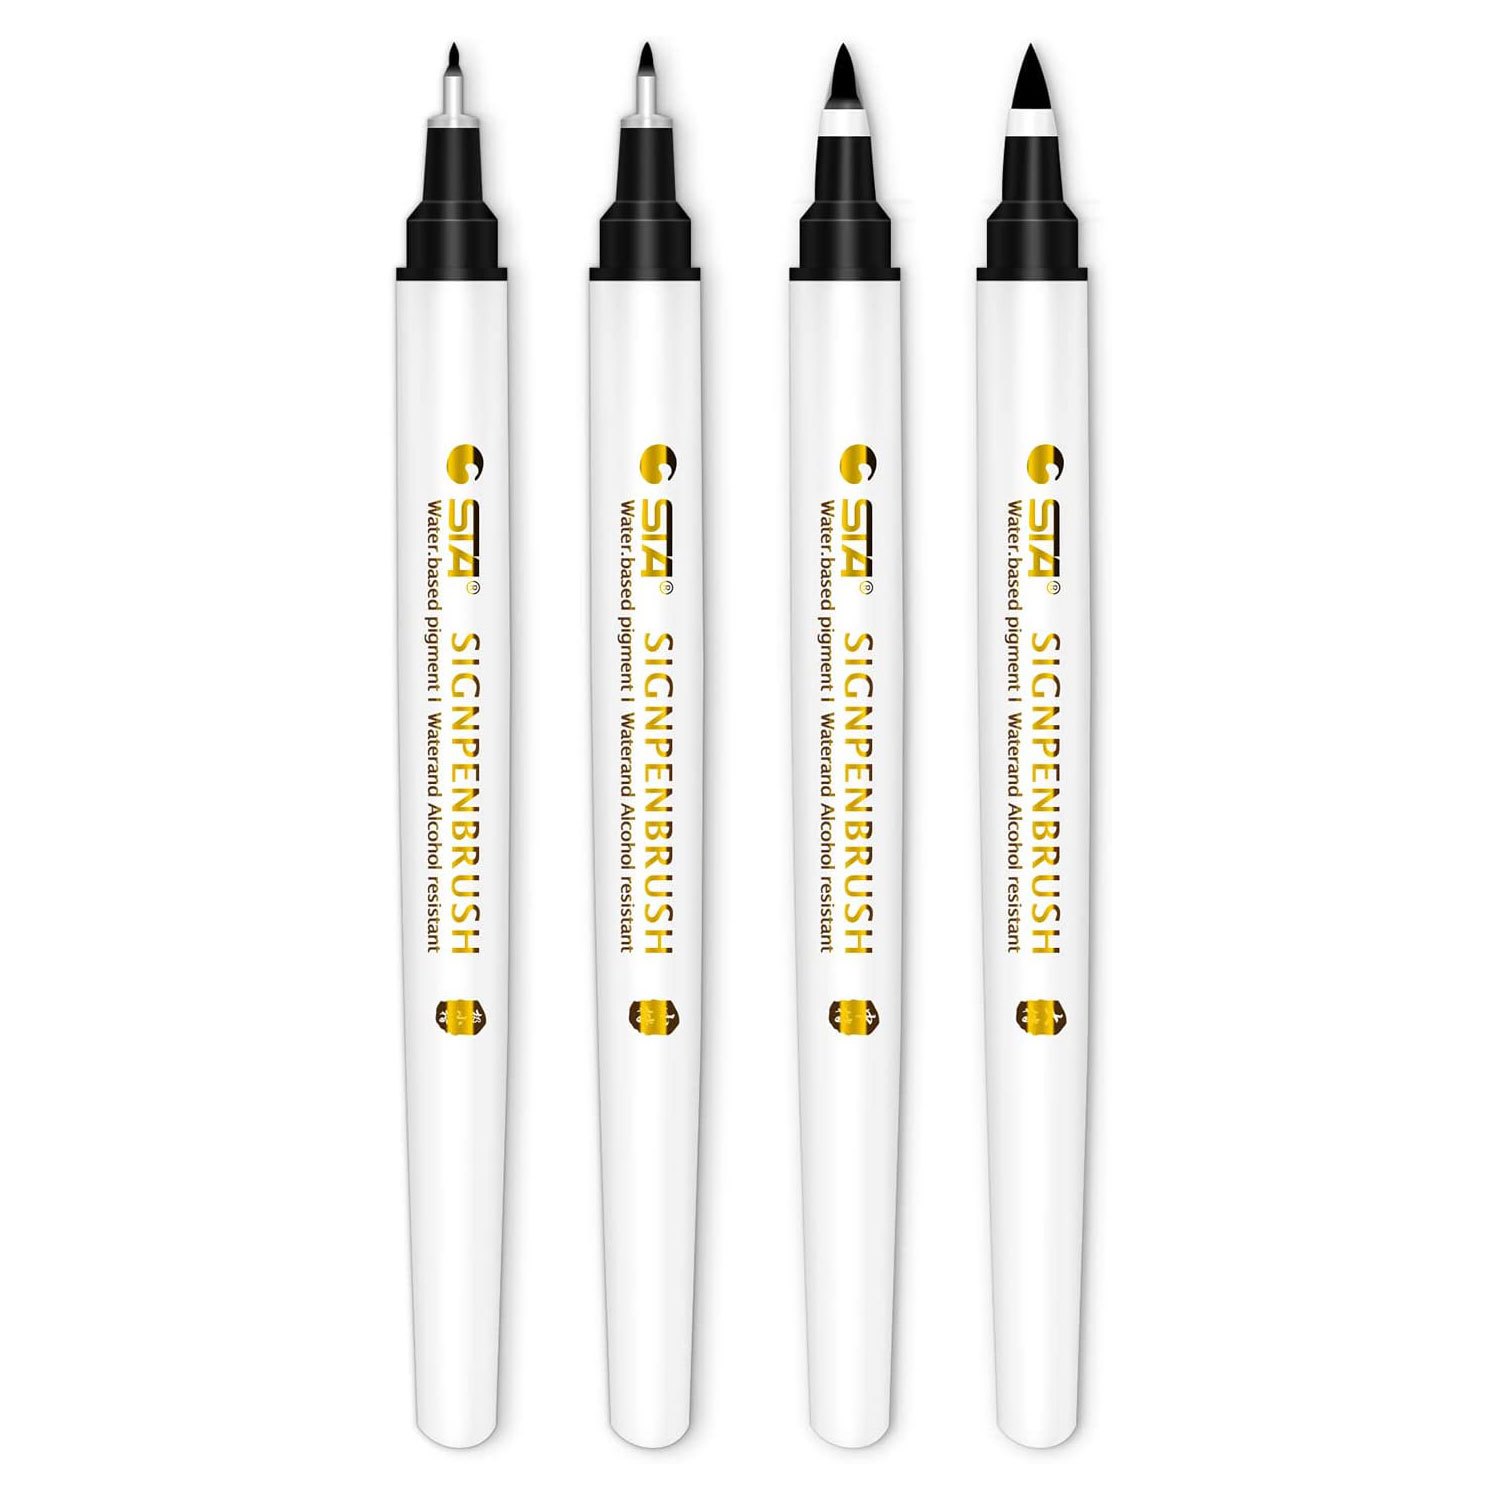 4 Sizes Nibs Calligraphy Pen Brush Lettering Pens Set flexible Refill –  AOOKMIYA